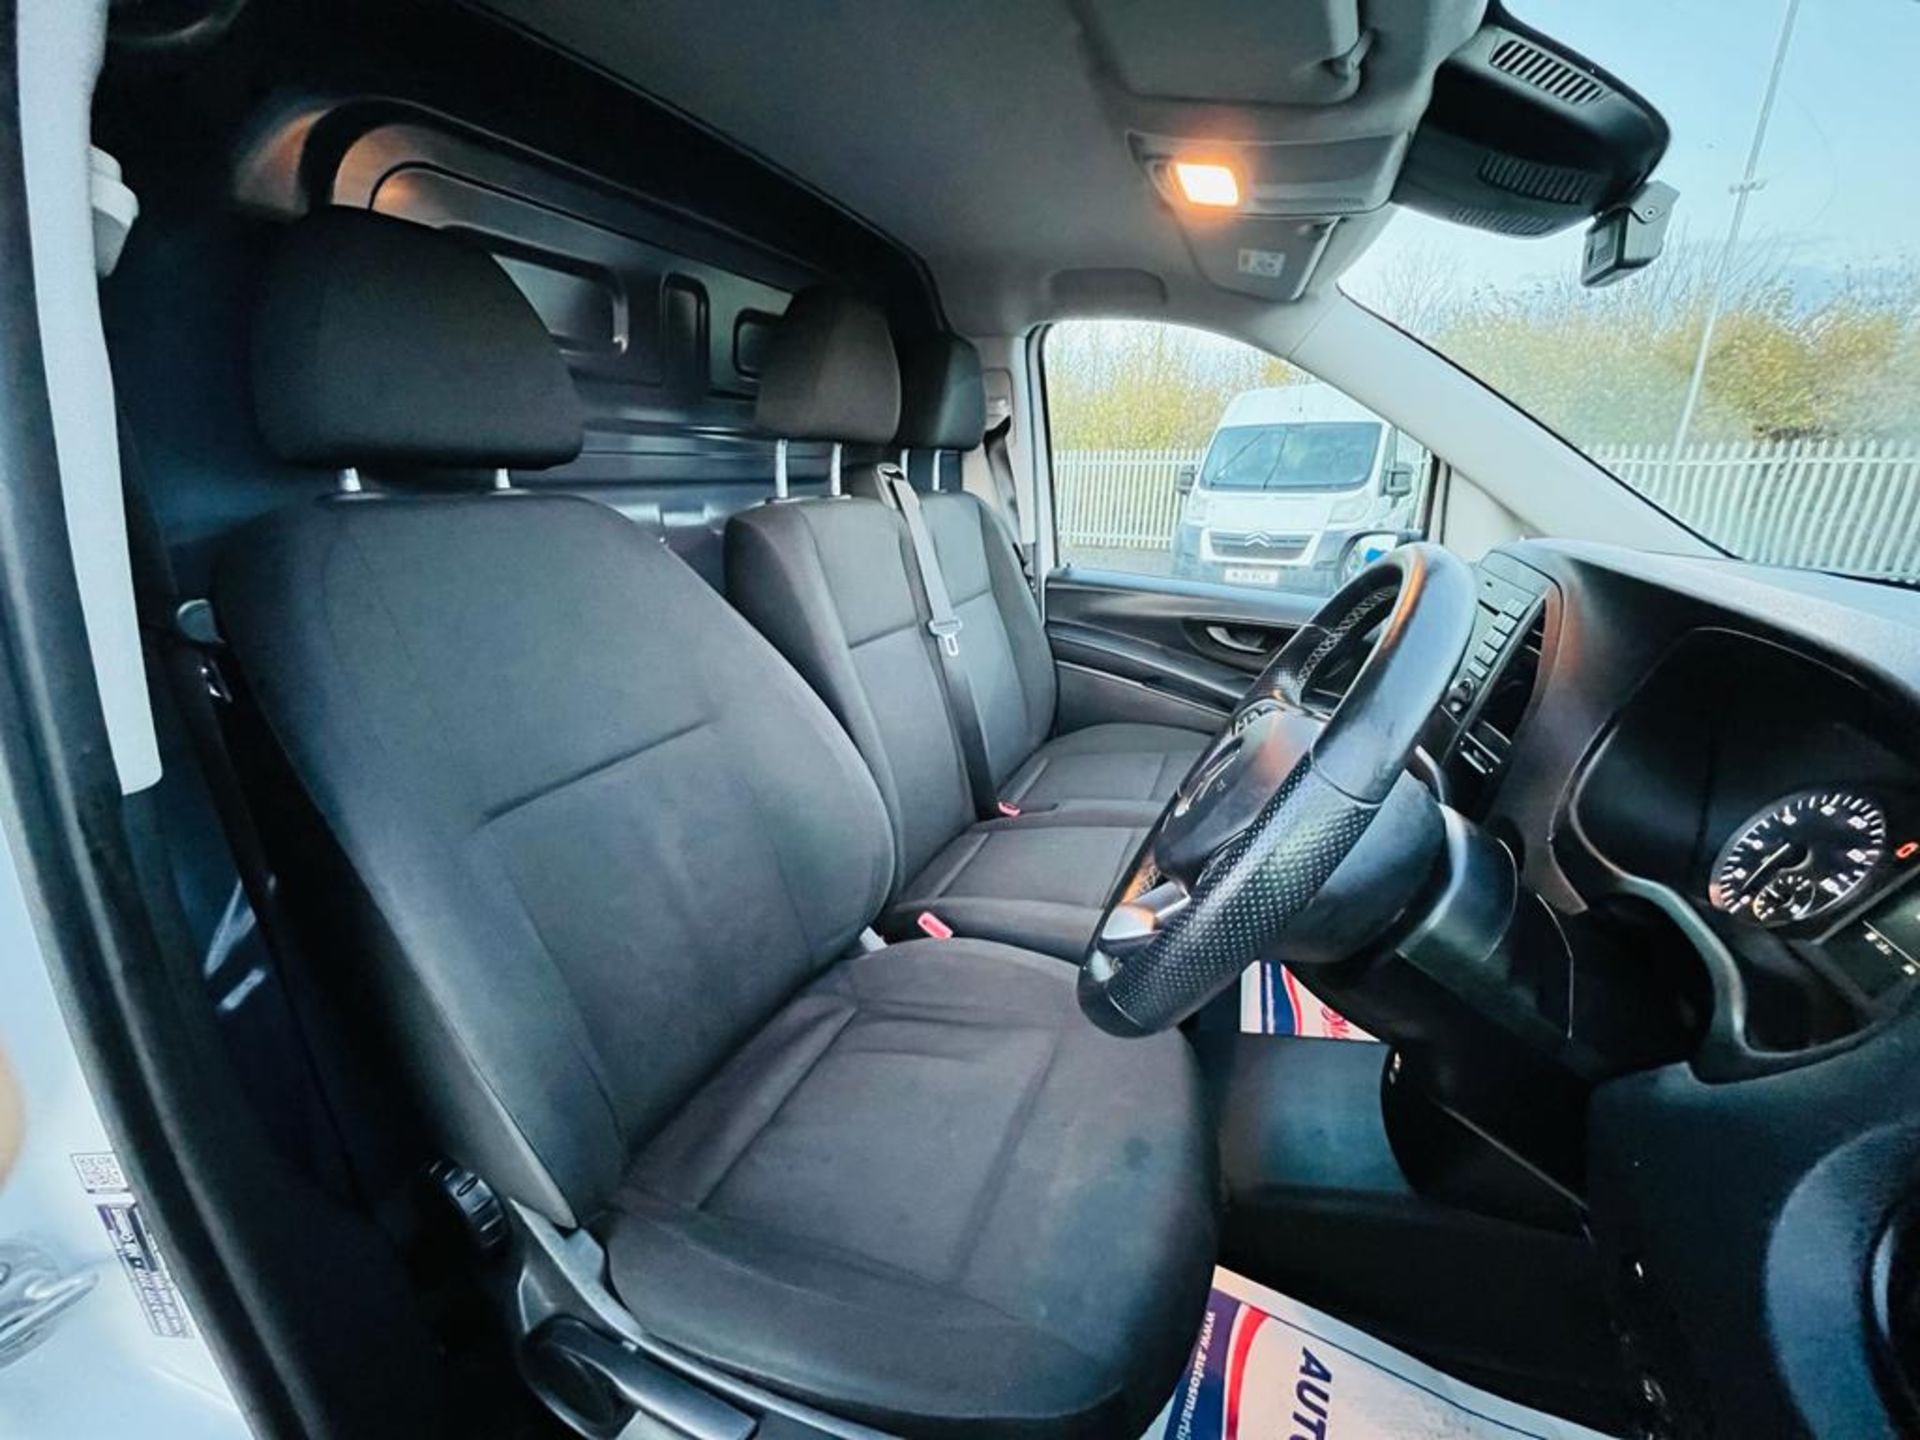 Mercedes Benz Vito 111 1.6 CDI Long wheel Base 2019 '19 Reg' - Sat Nav - ULEZ Compliant - Image 17 of 25